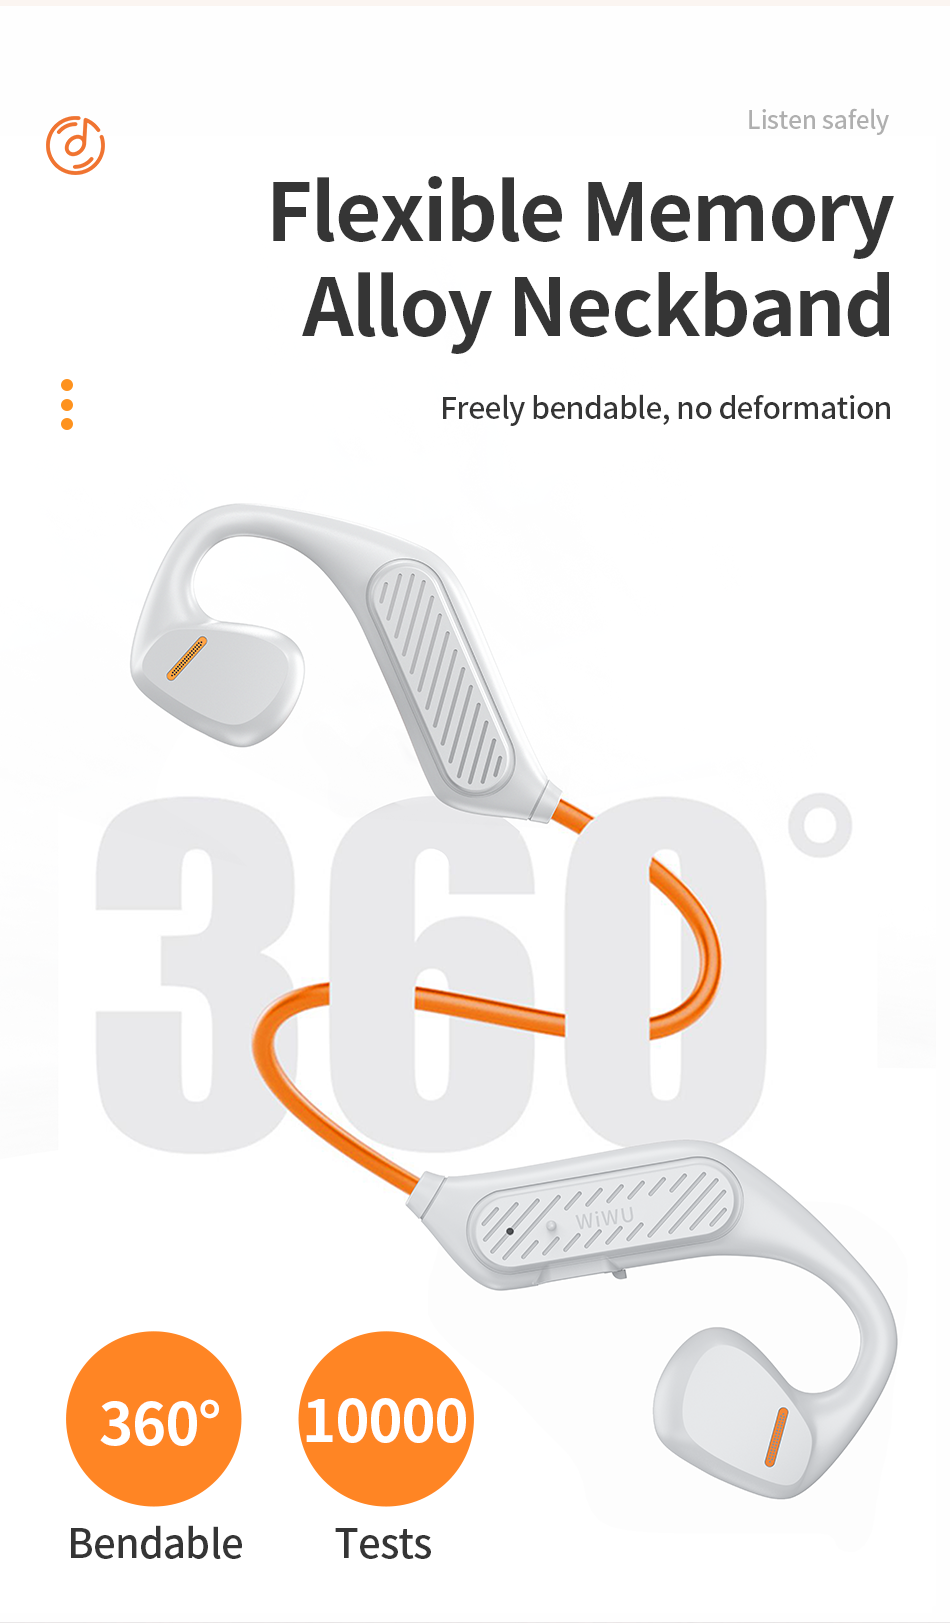 Wiwu Q1 air conduction wireless headset - White